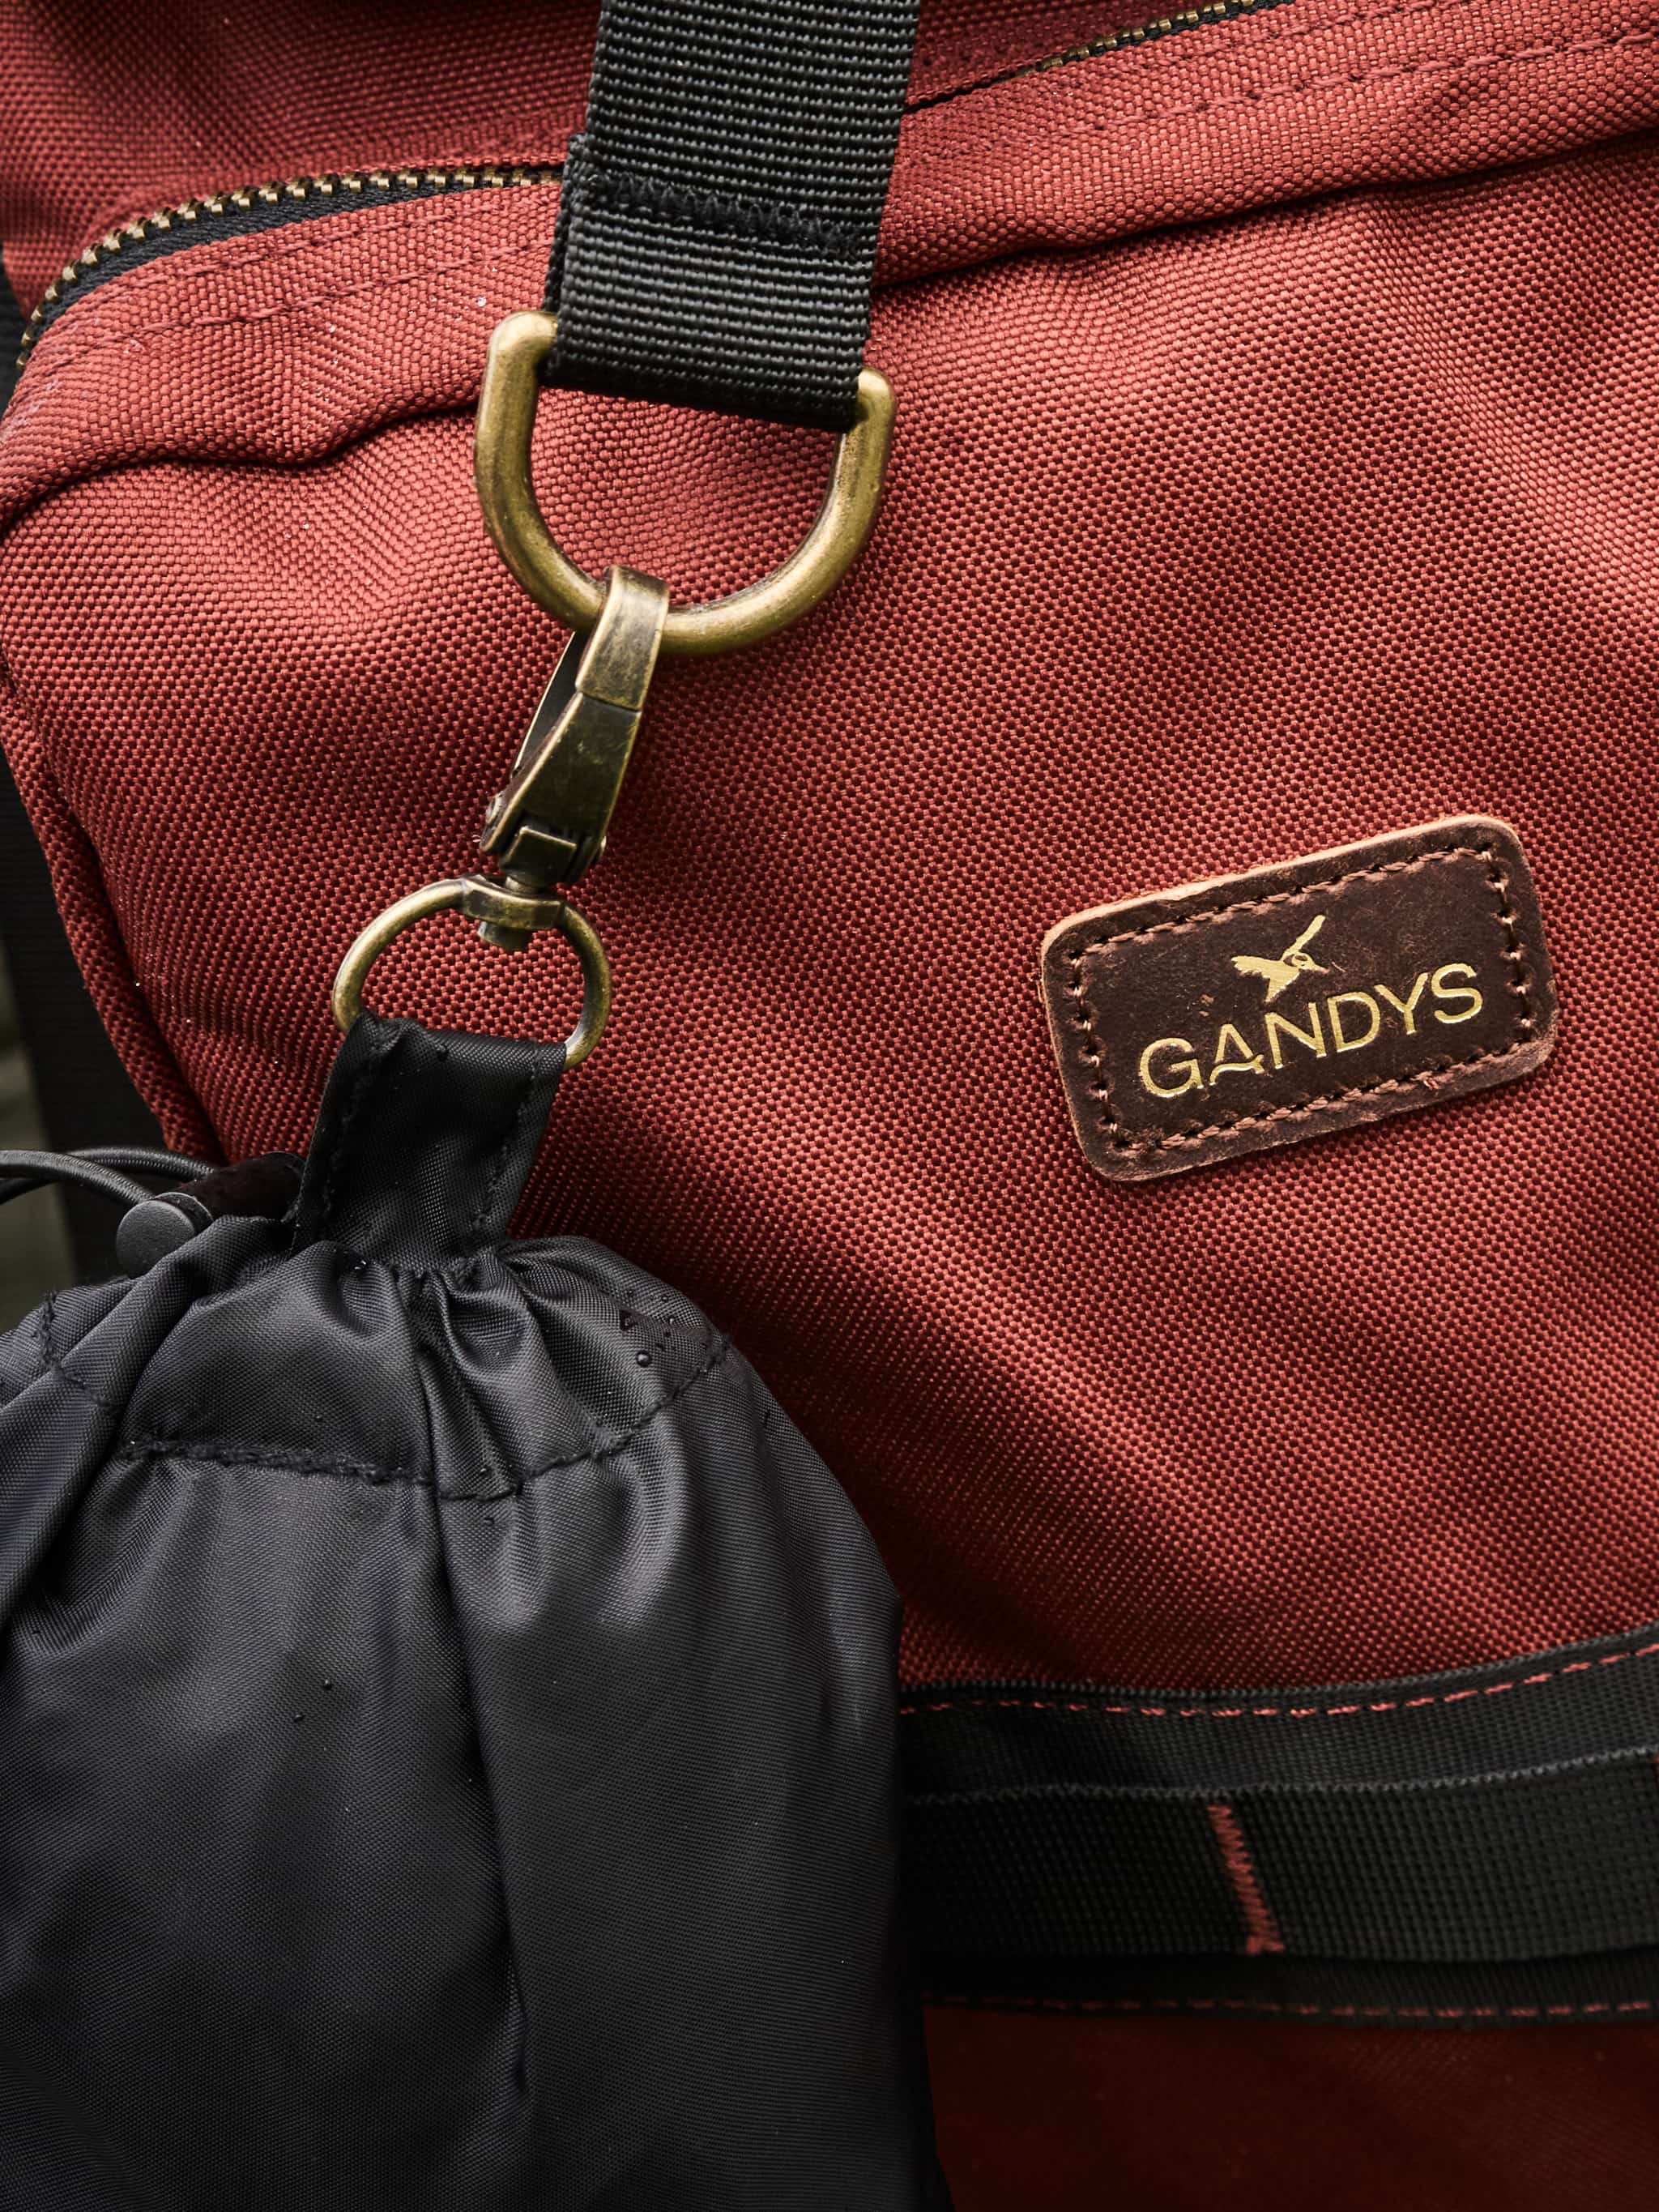 Gandys Bali Authentic Voyager Backpack, Beige